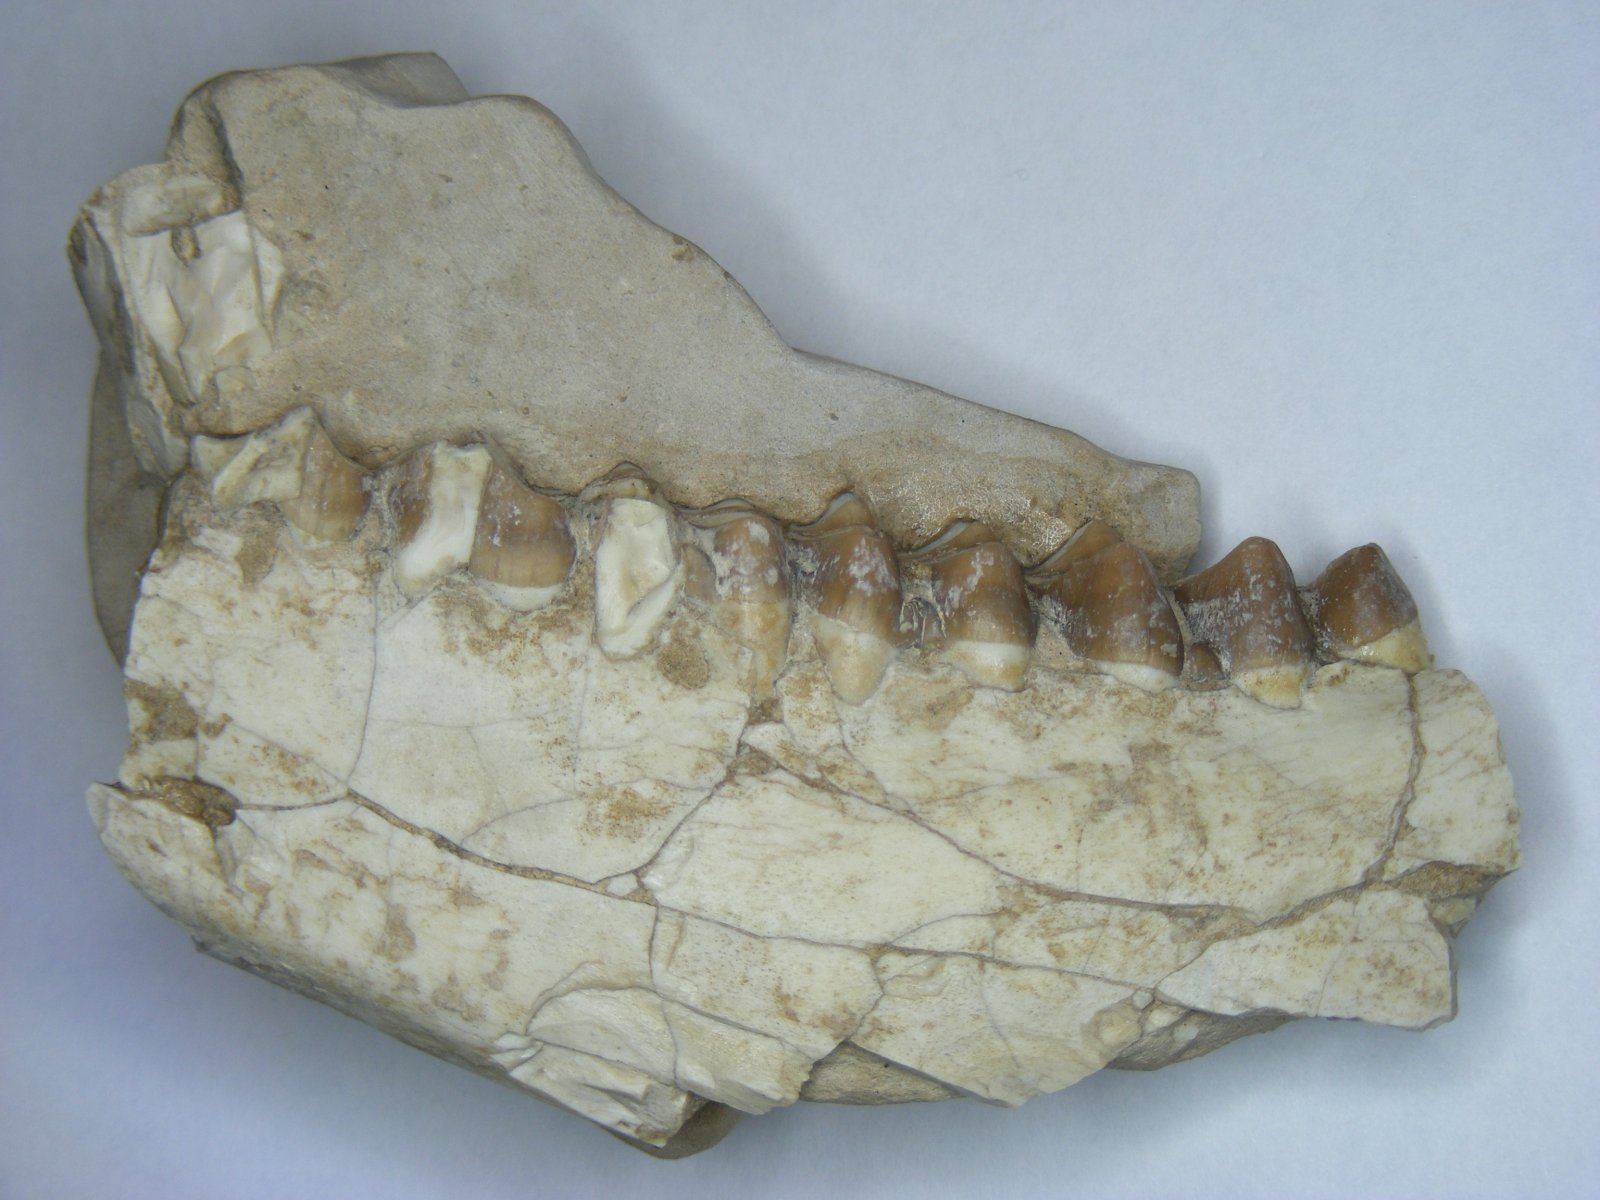 Merycoidodon sp. Associated specimens #1 image 1/2